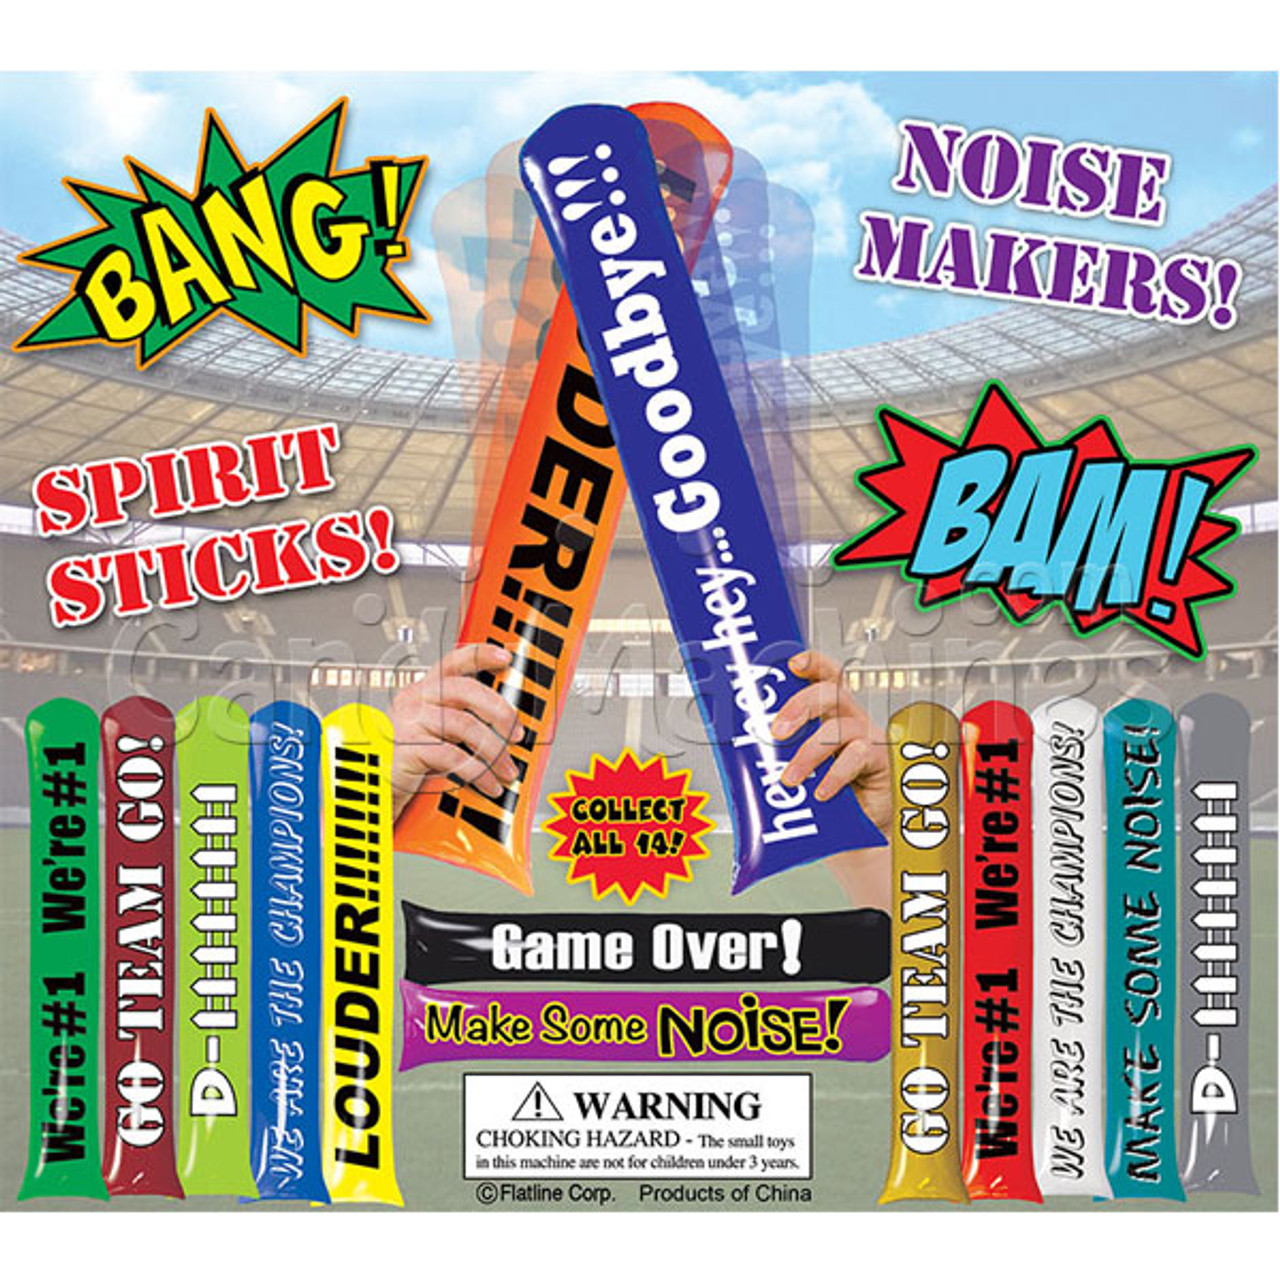 Thunder Stick Noise Makers Vending Capsules (2-inch